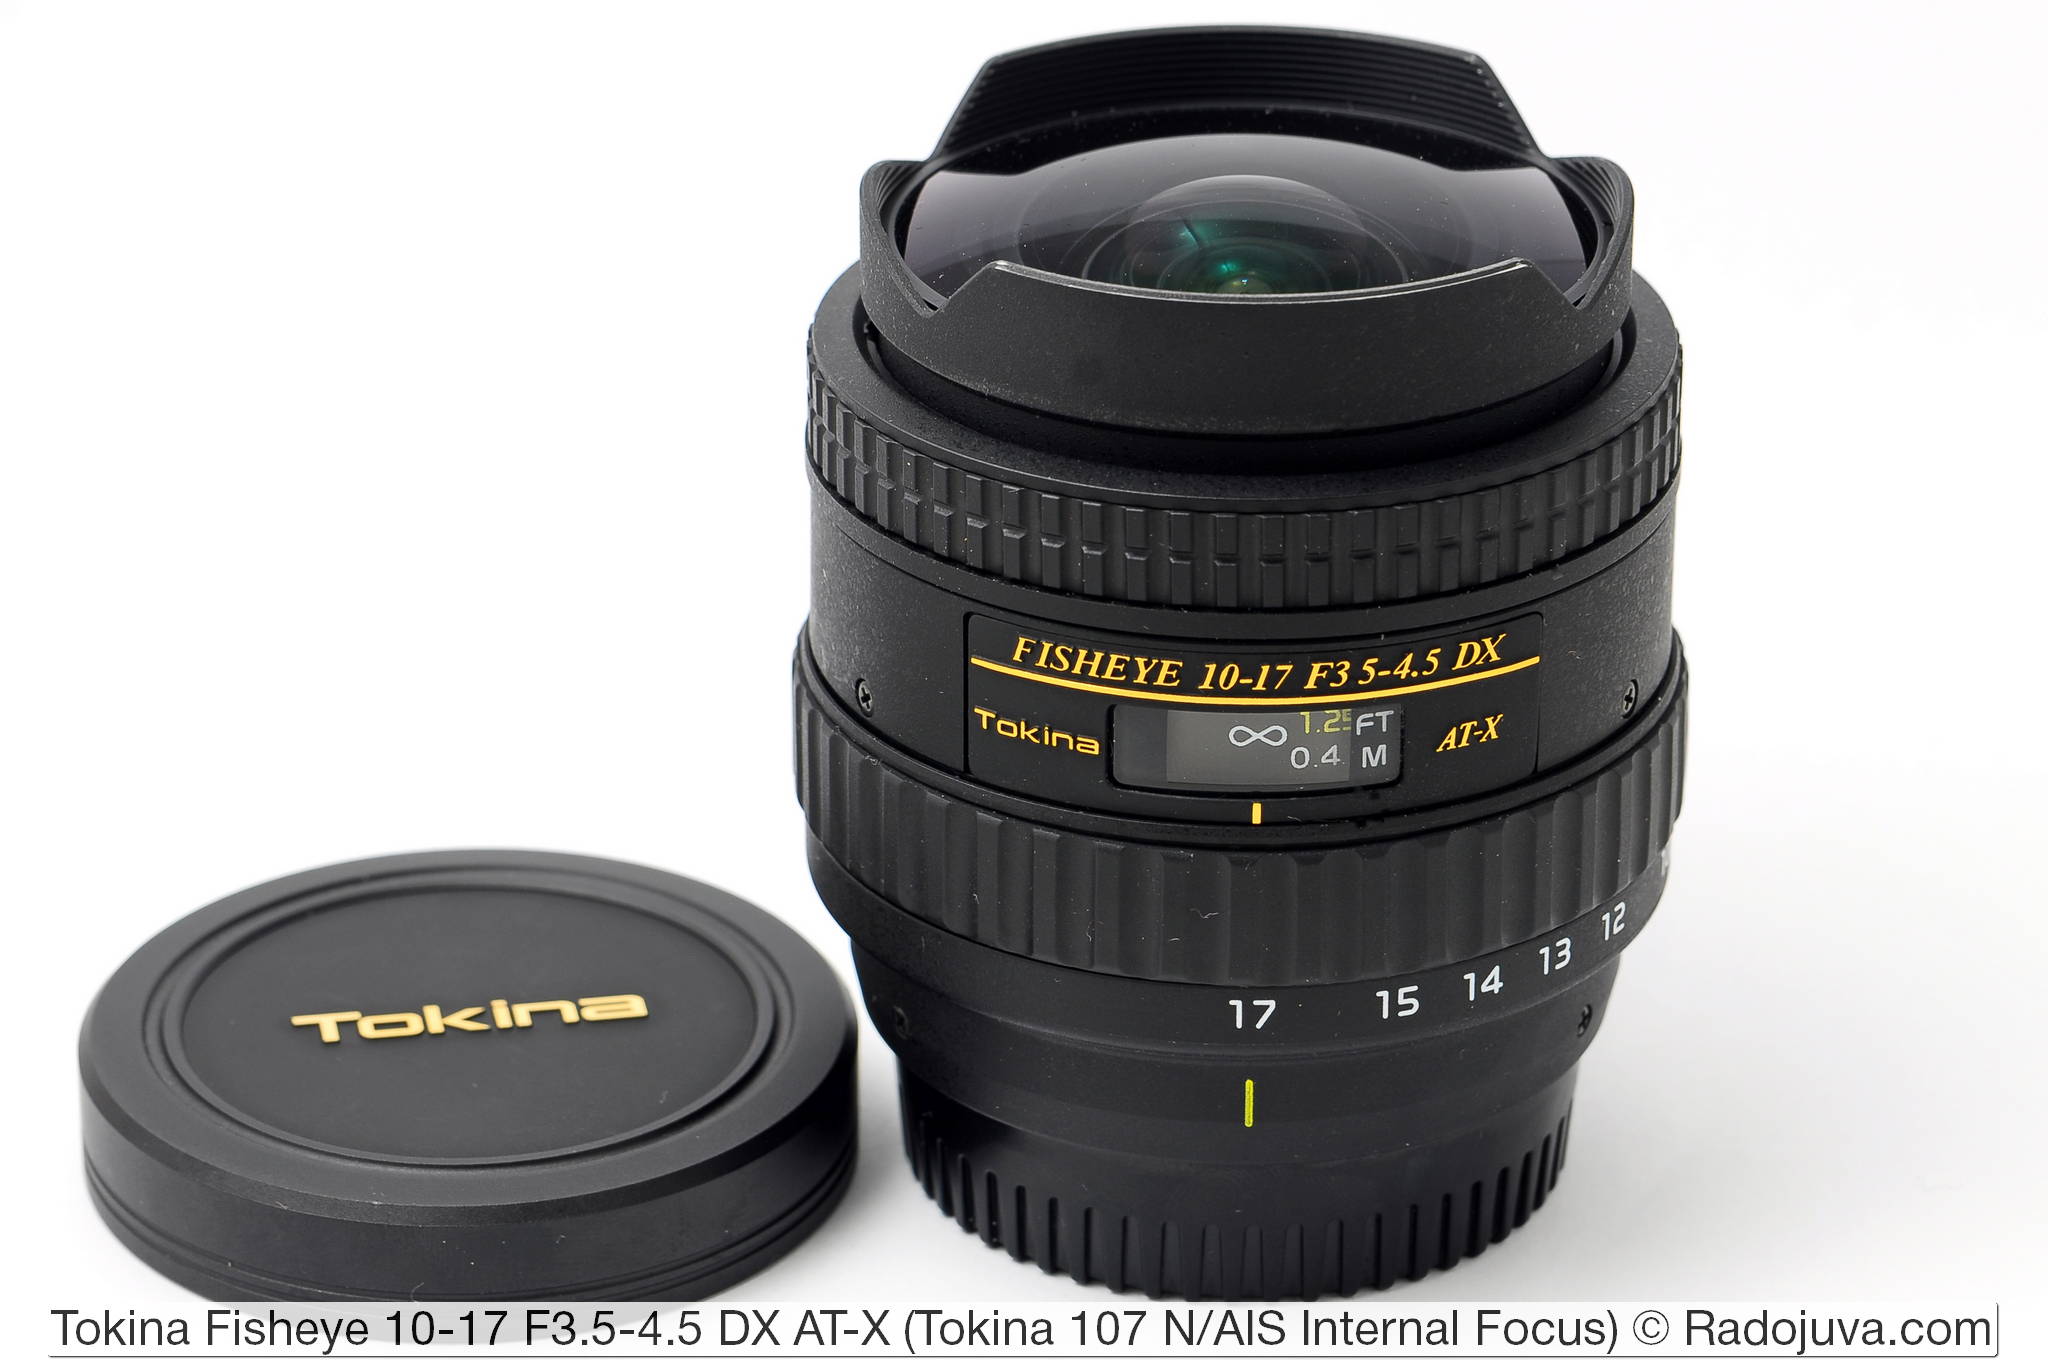 Tokina 107 Fisheye 10-17mm F3.5-4.5 DX AT-X Internal Focus